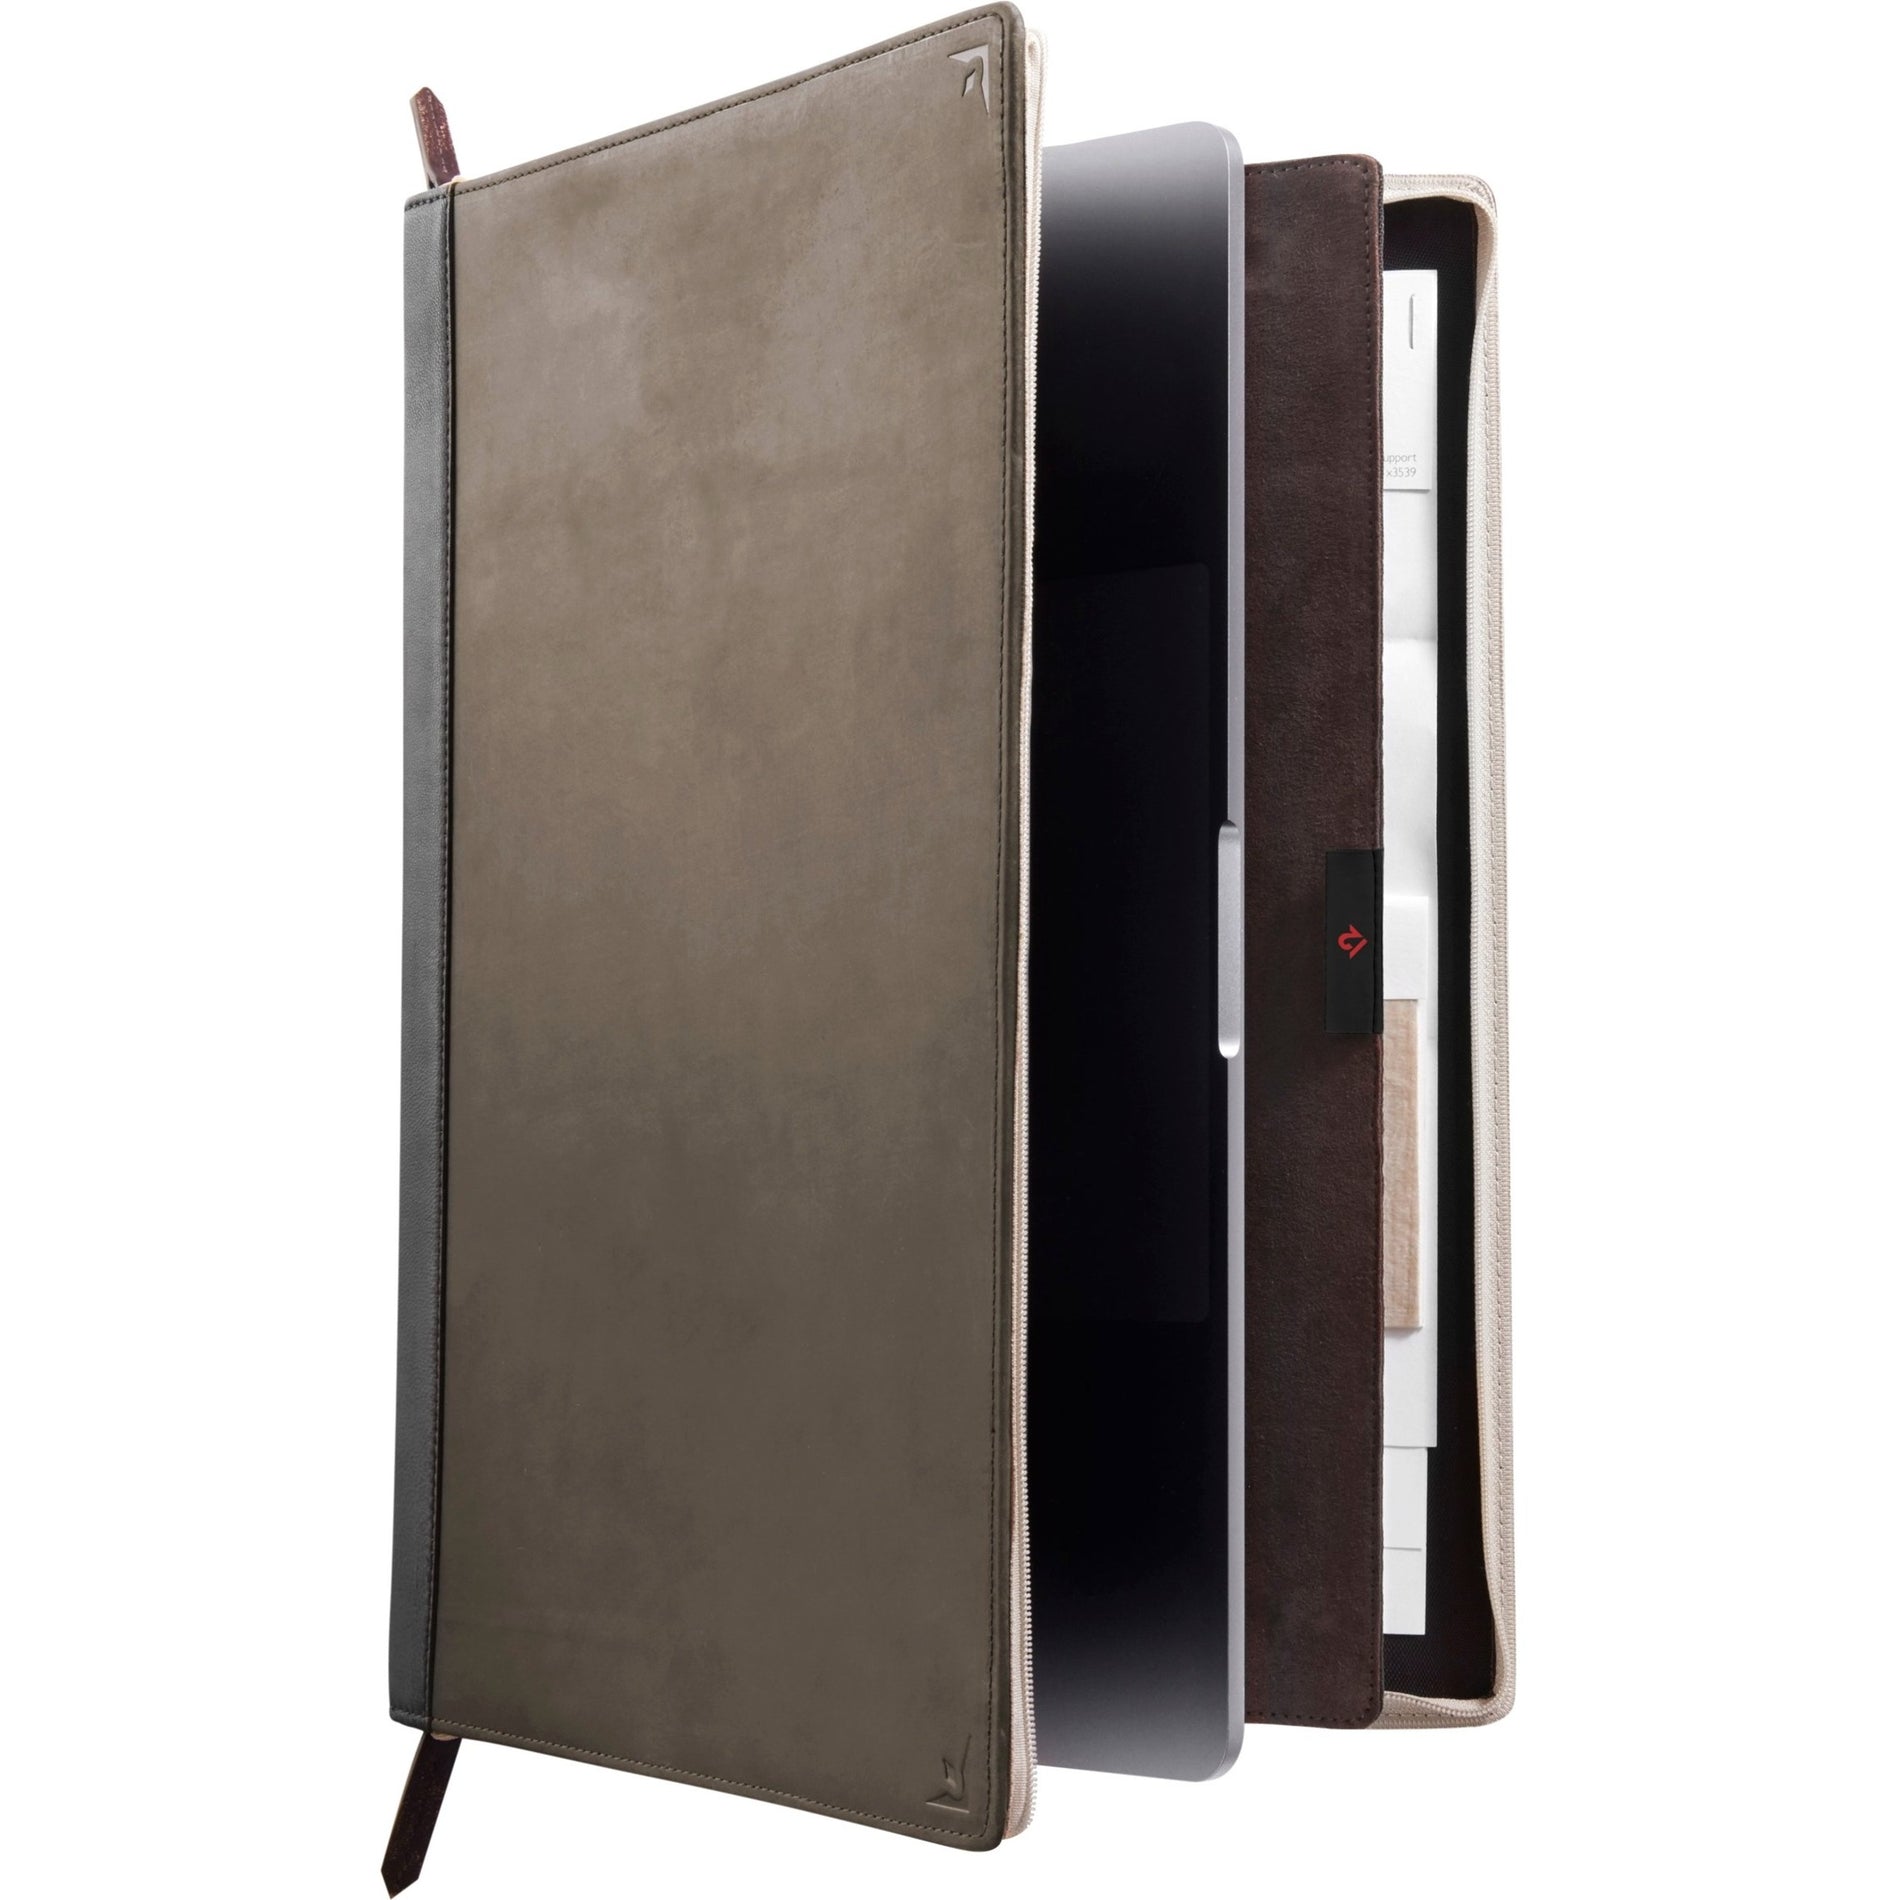 Twelve South 12-2020 BookBook For MacBook, Vintage Brown Genuine Leather Carrying Case